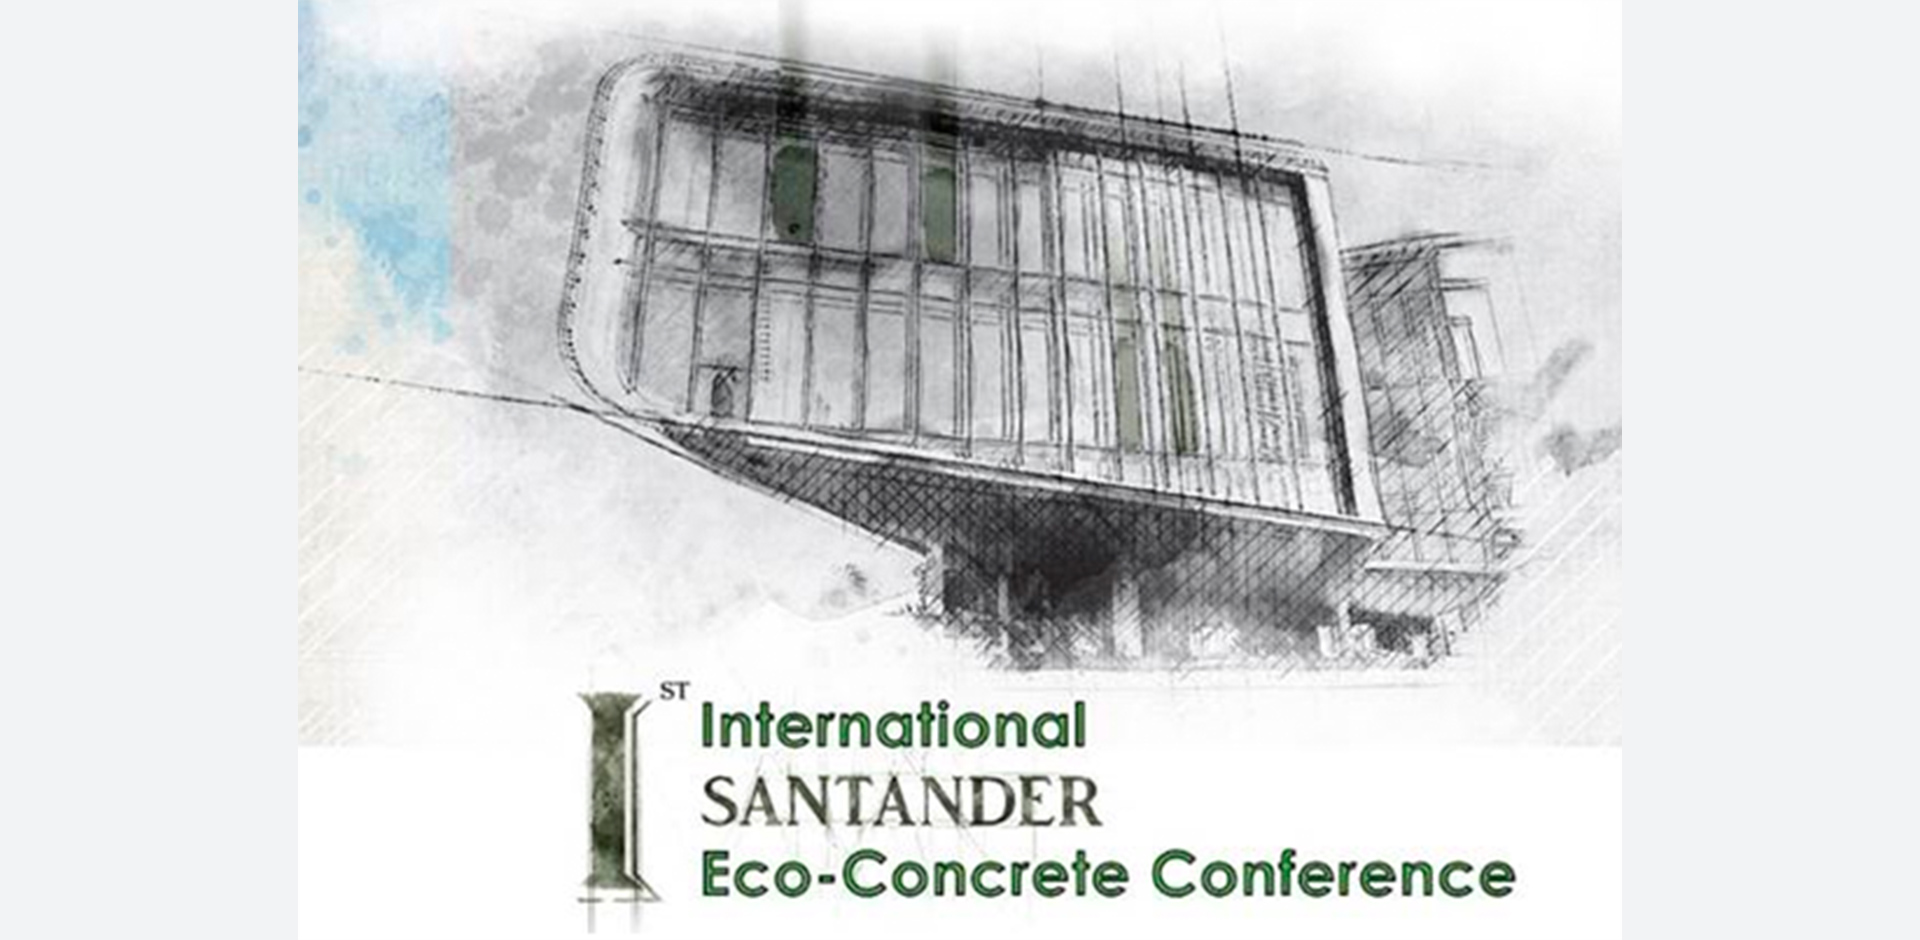 INGECID sponsors the First International Santander Eco-Concrete Conference